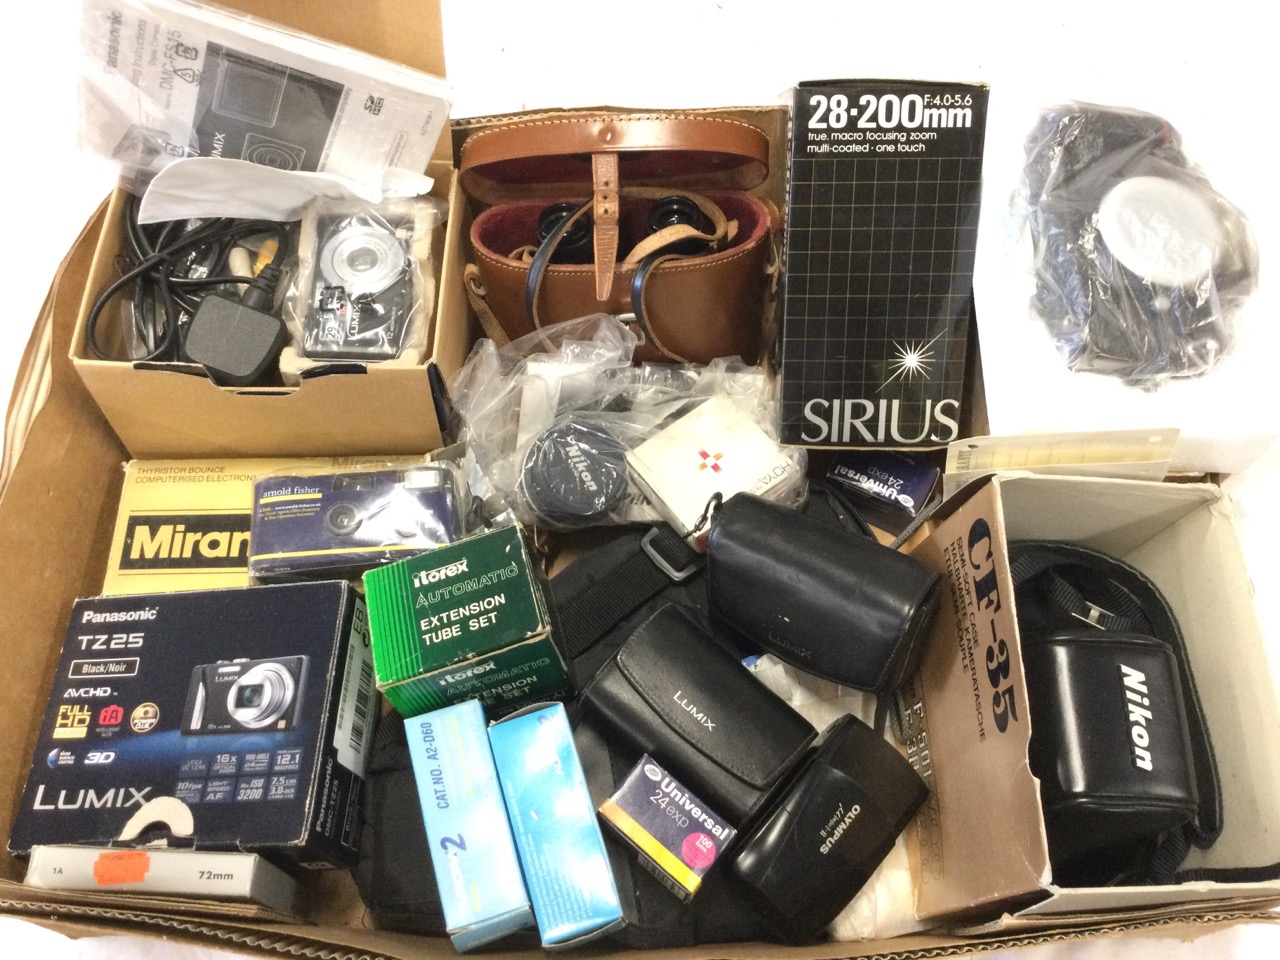 Miscellaneous camera gear including boxed Panasonic Lumixes, zoom lenses, Olympus, a flash unit,